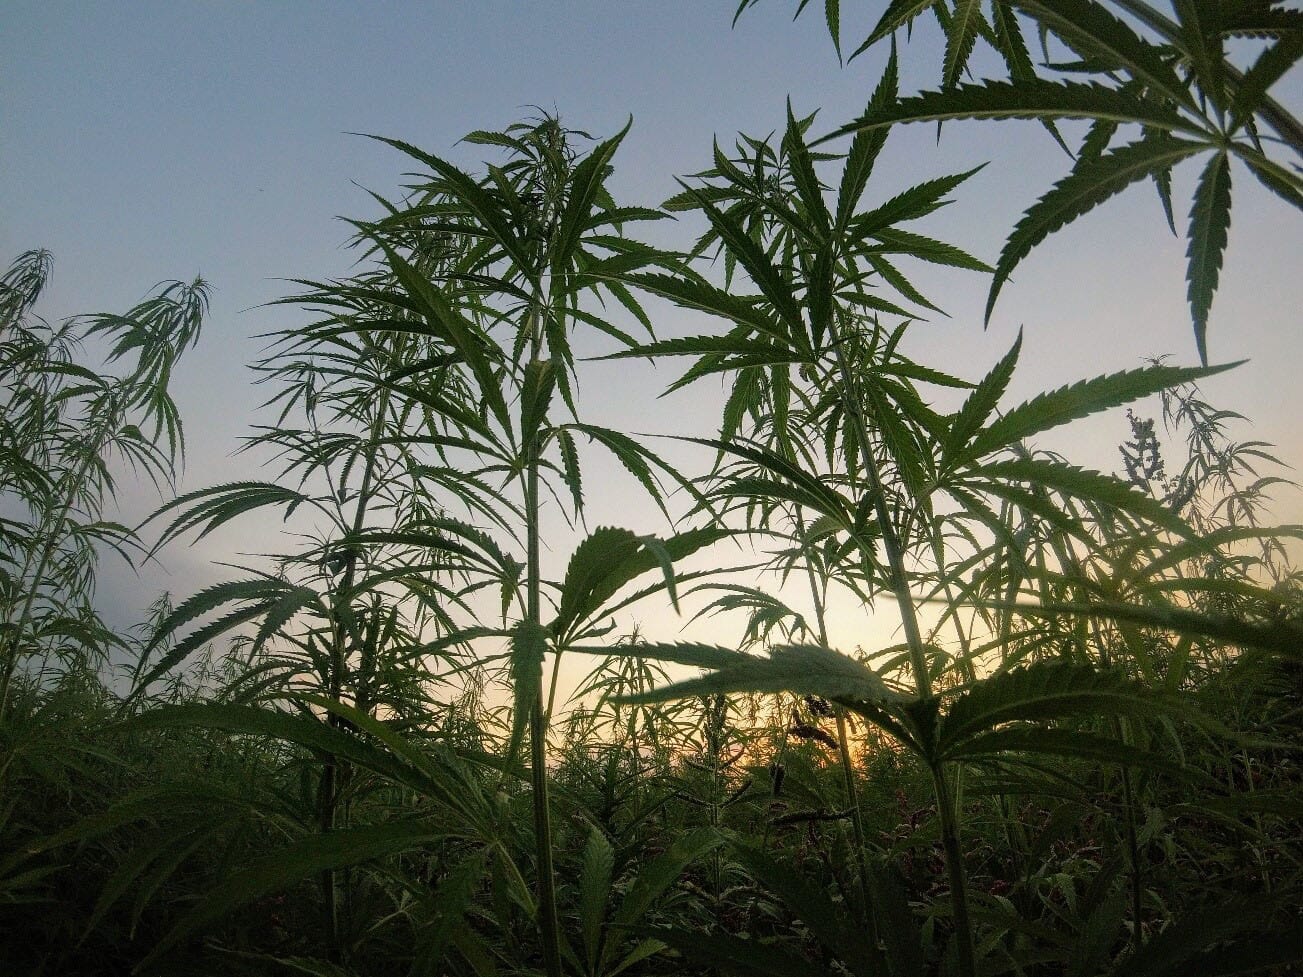 Outdoor Growing Cannabis